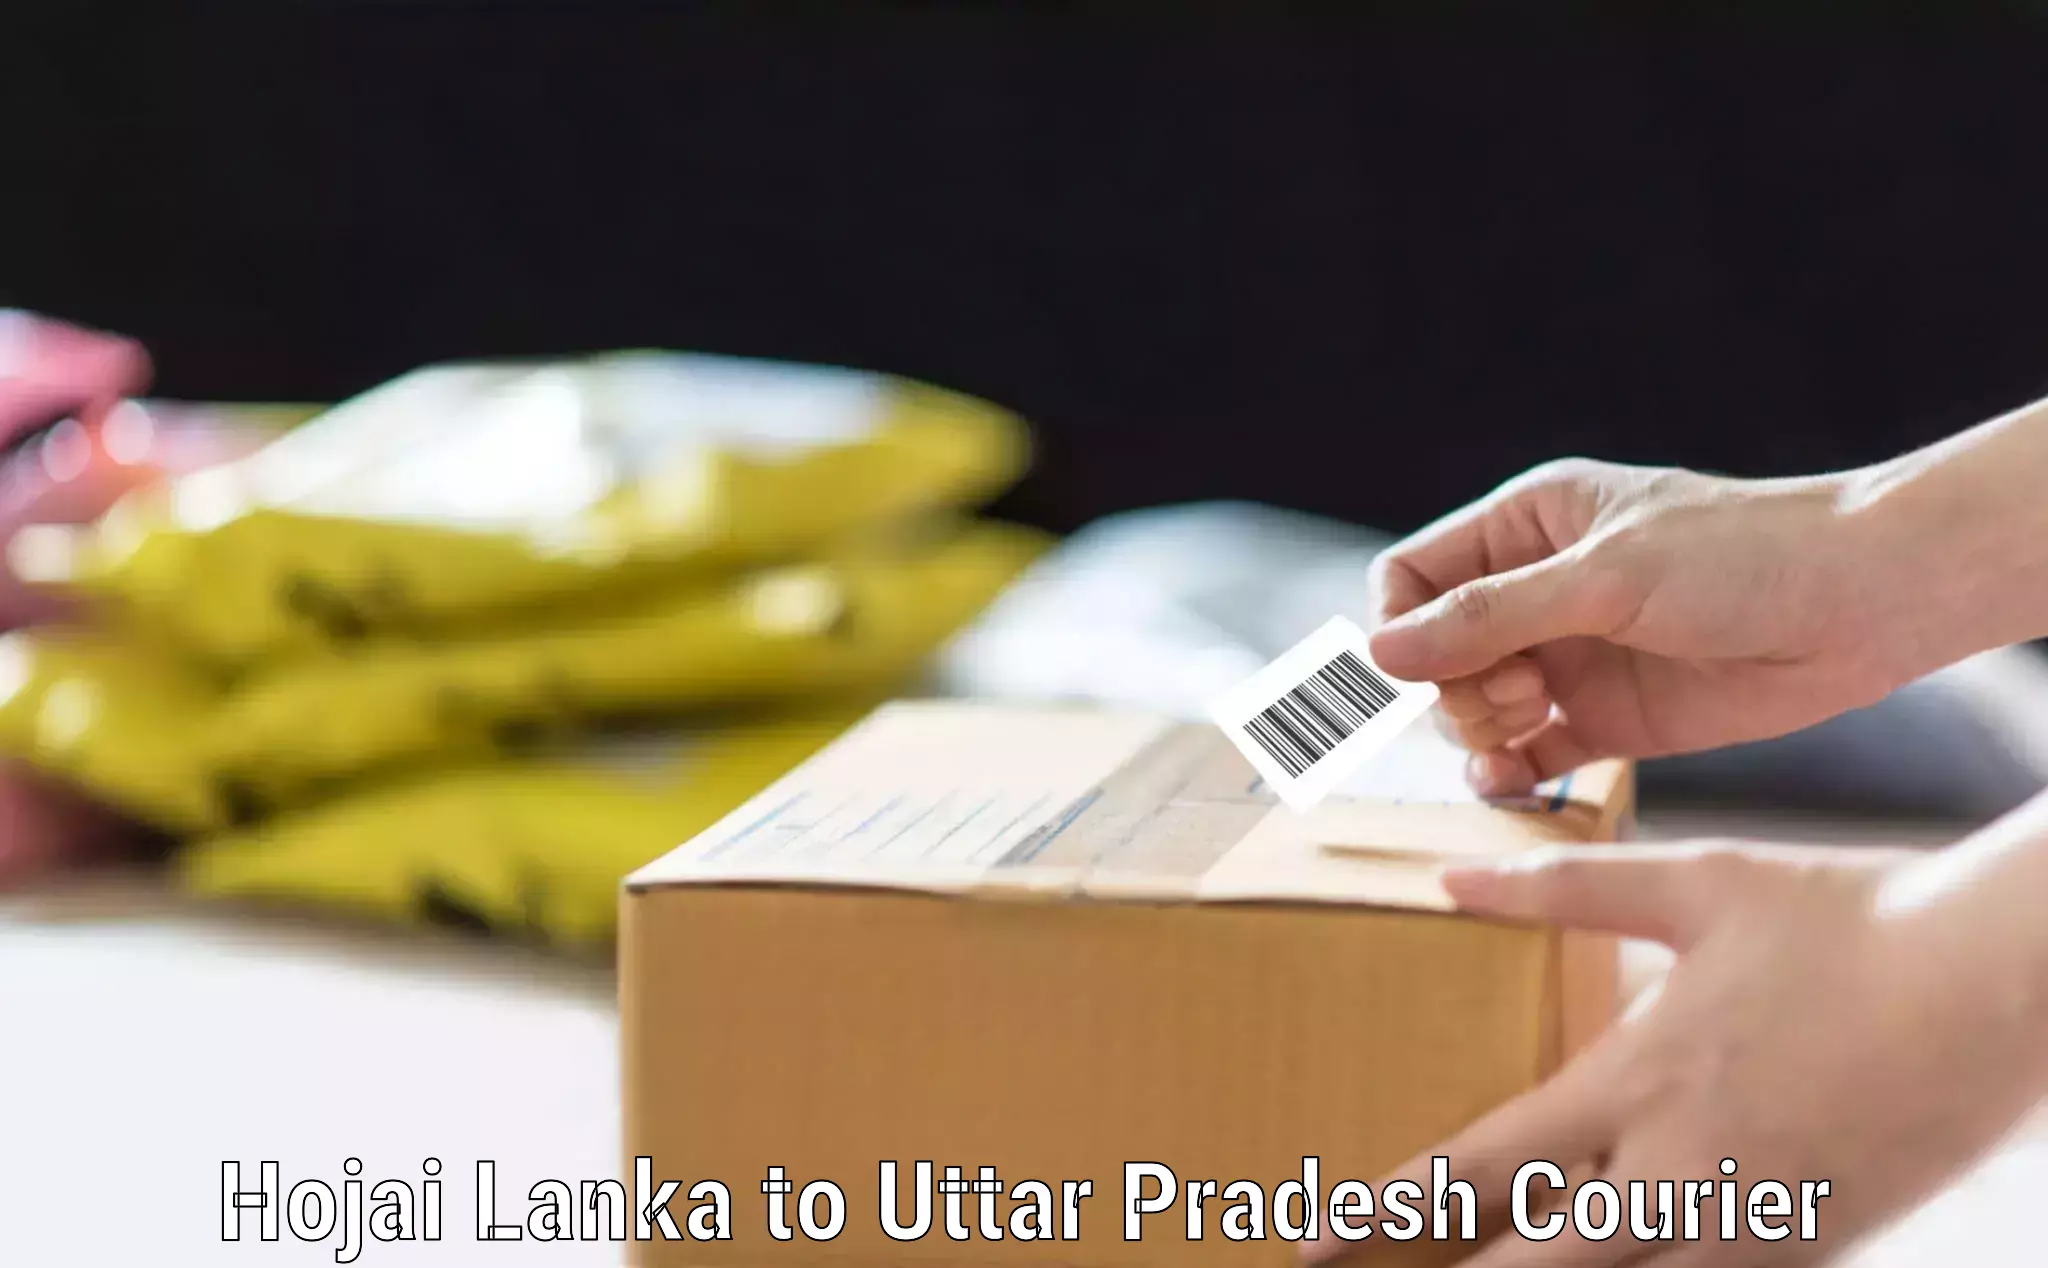 Luggage transport operations Hojai Lanka to Uttar Pradesh